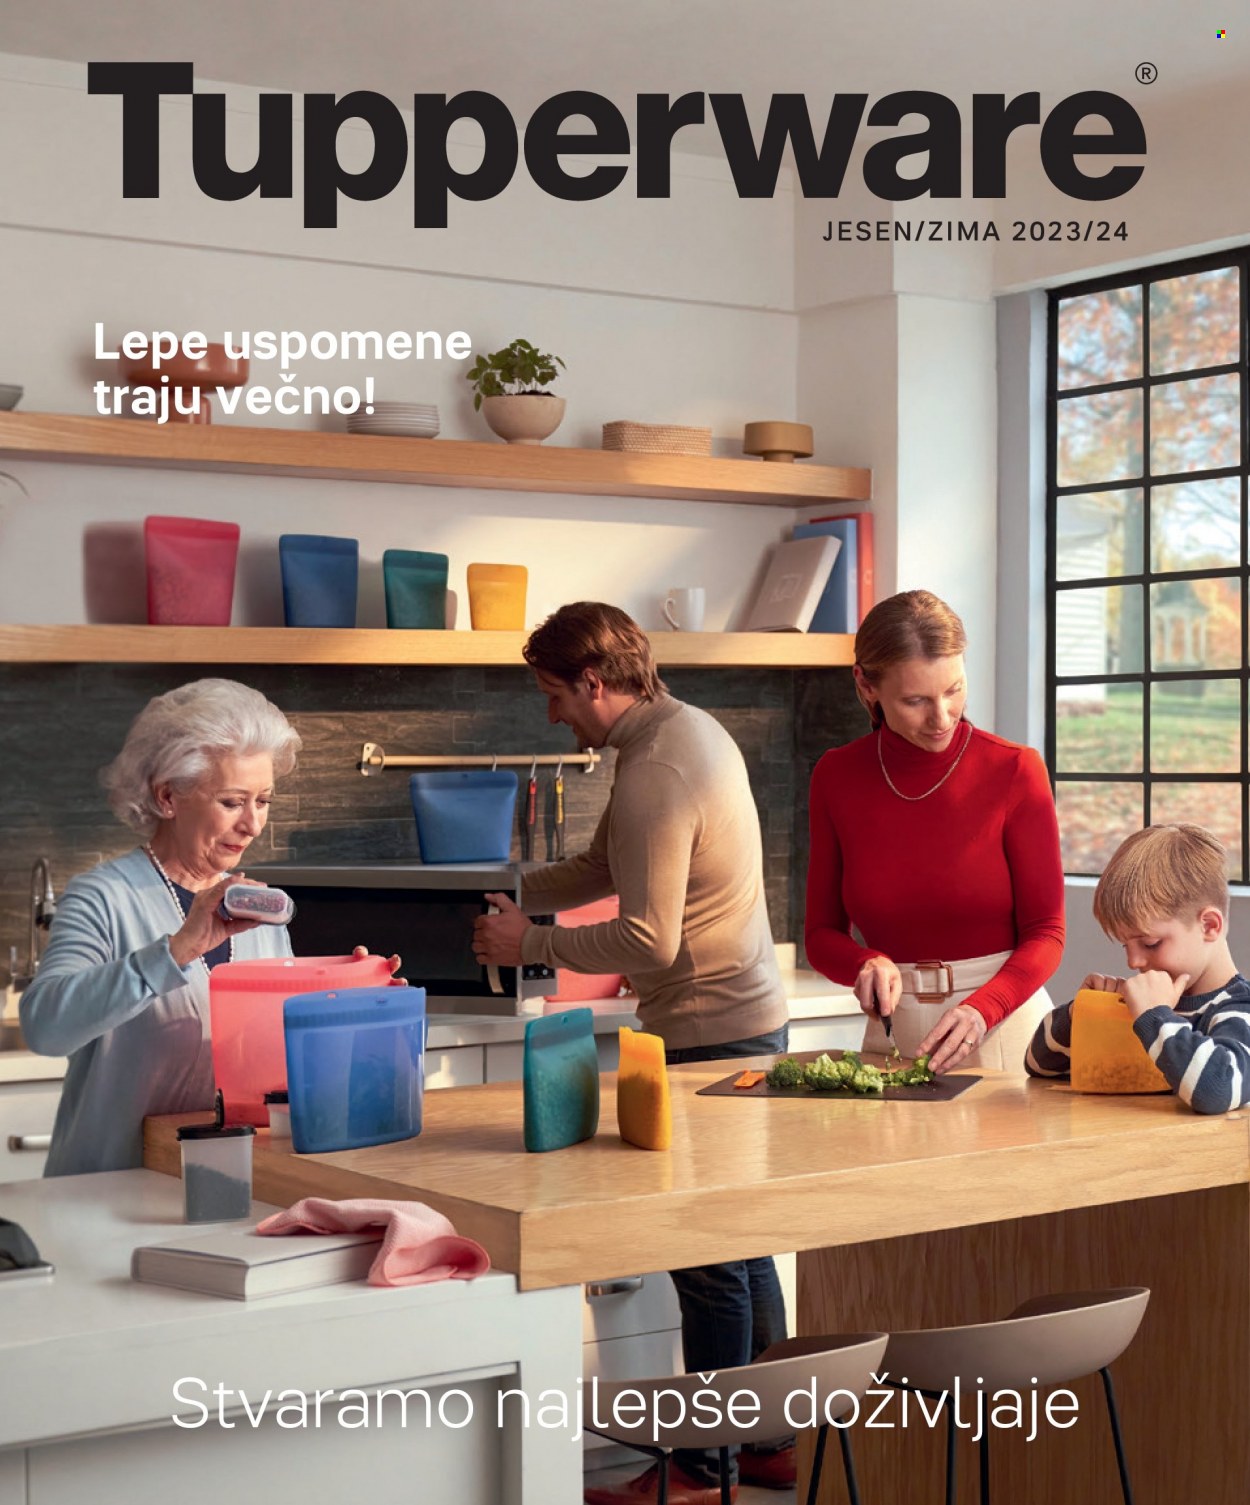 tupperware - Tupperware katalog januar 2024 - page: 1